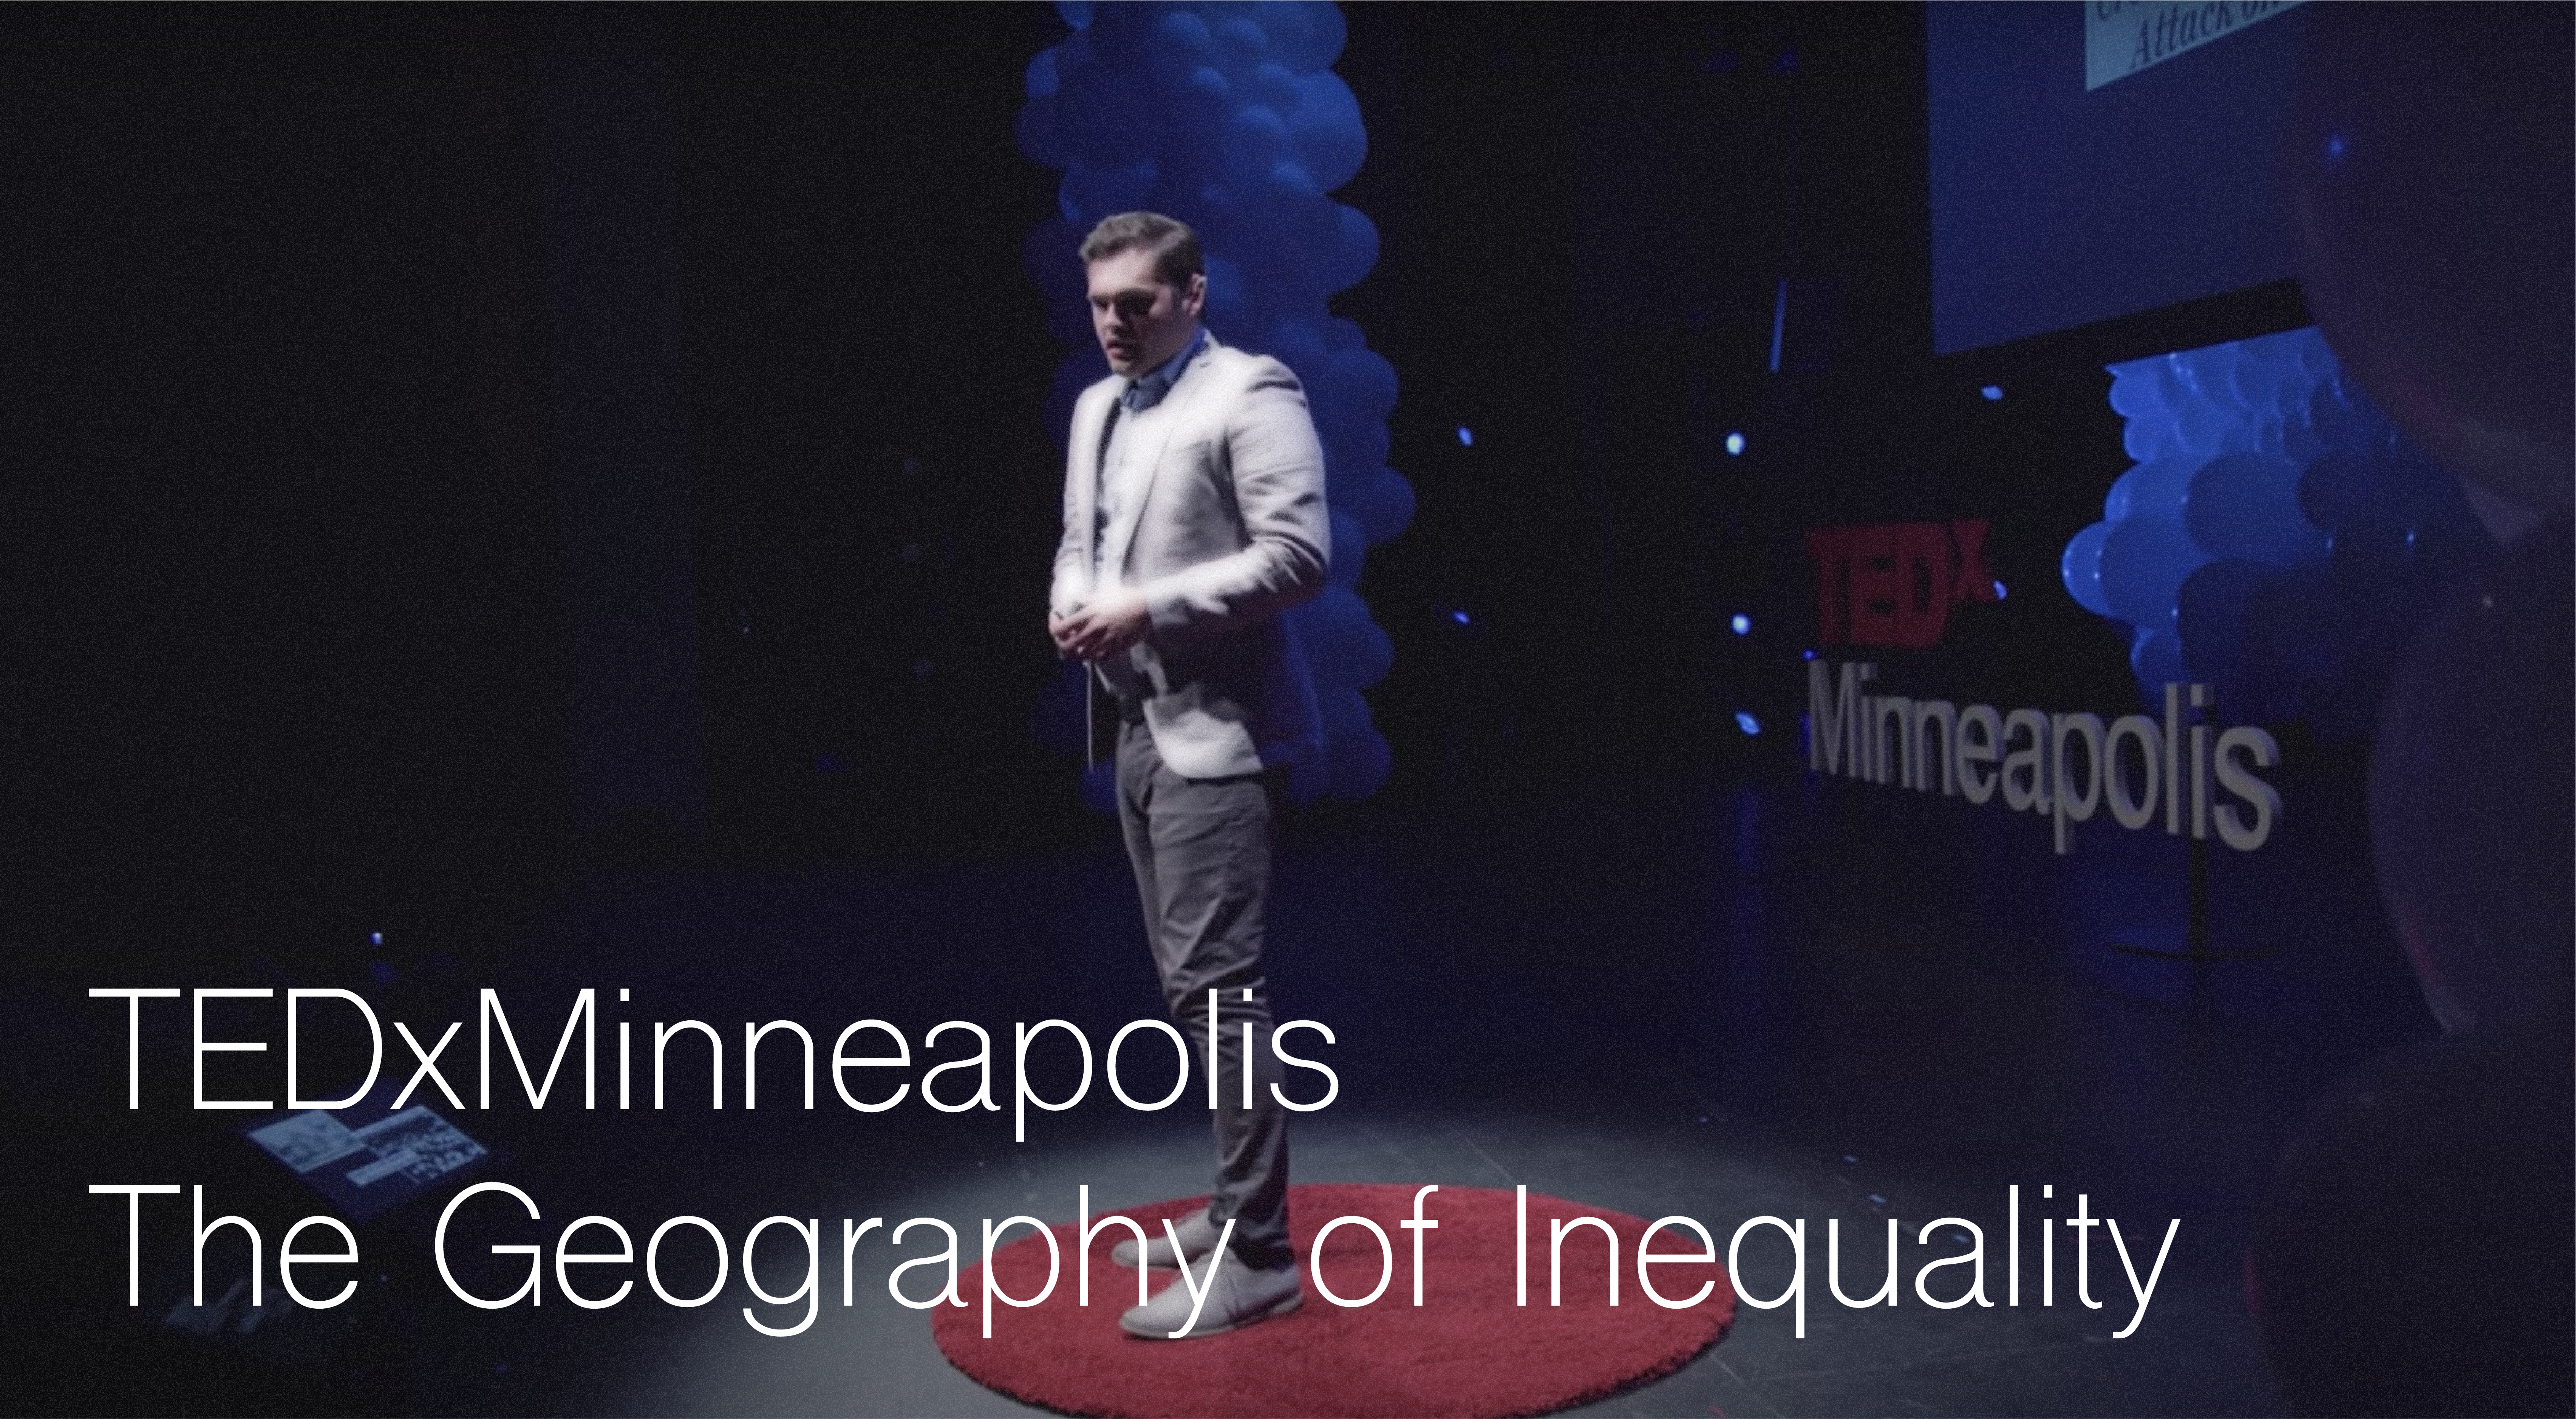 TEDx Minneapolis